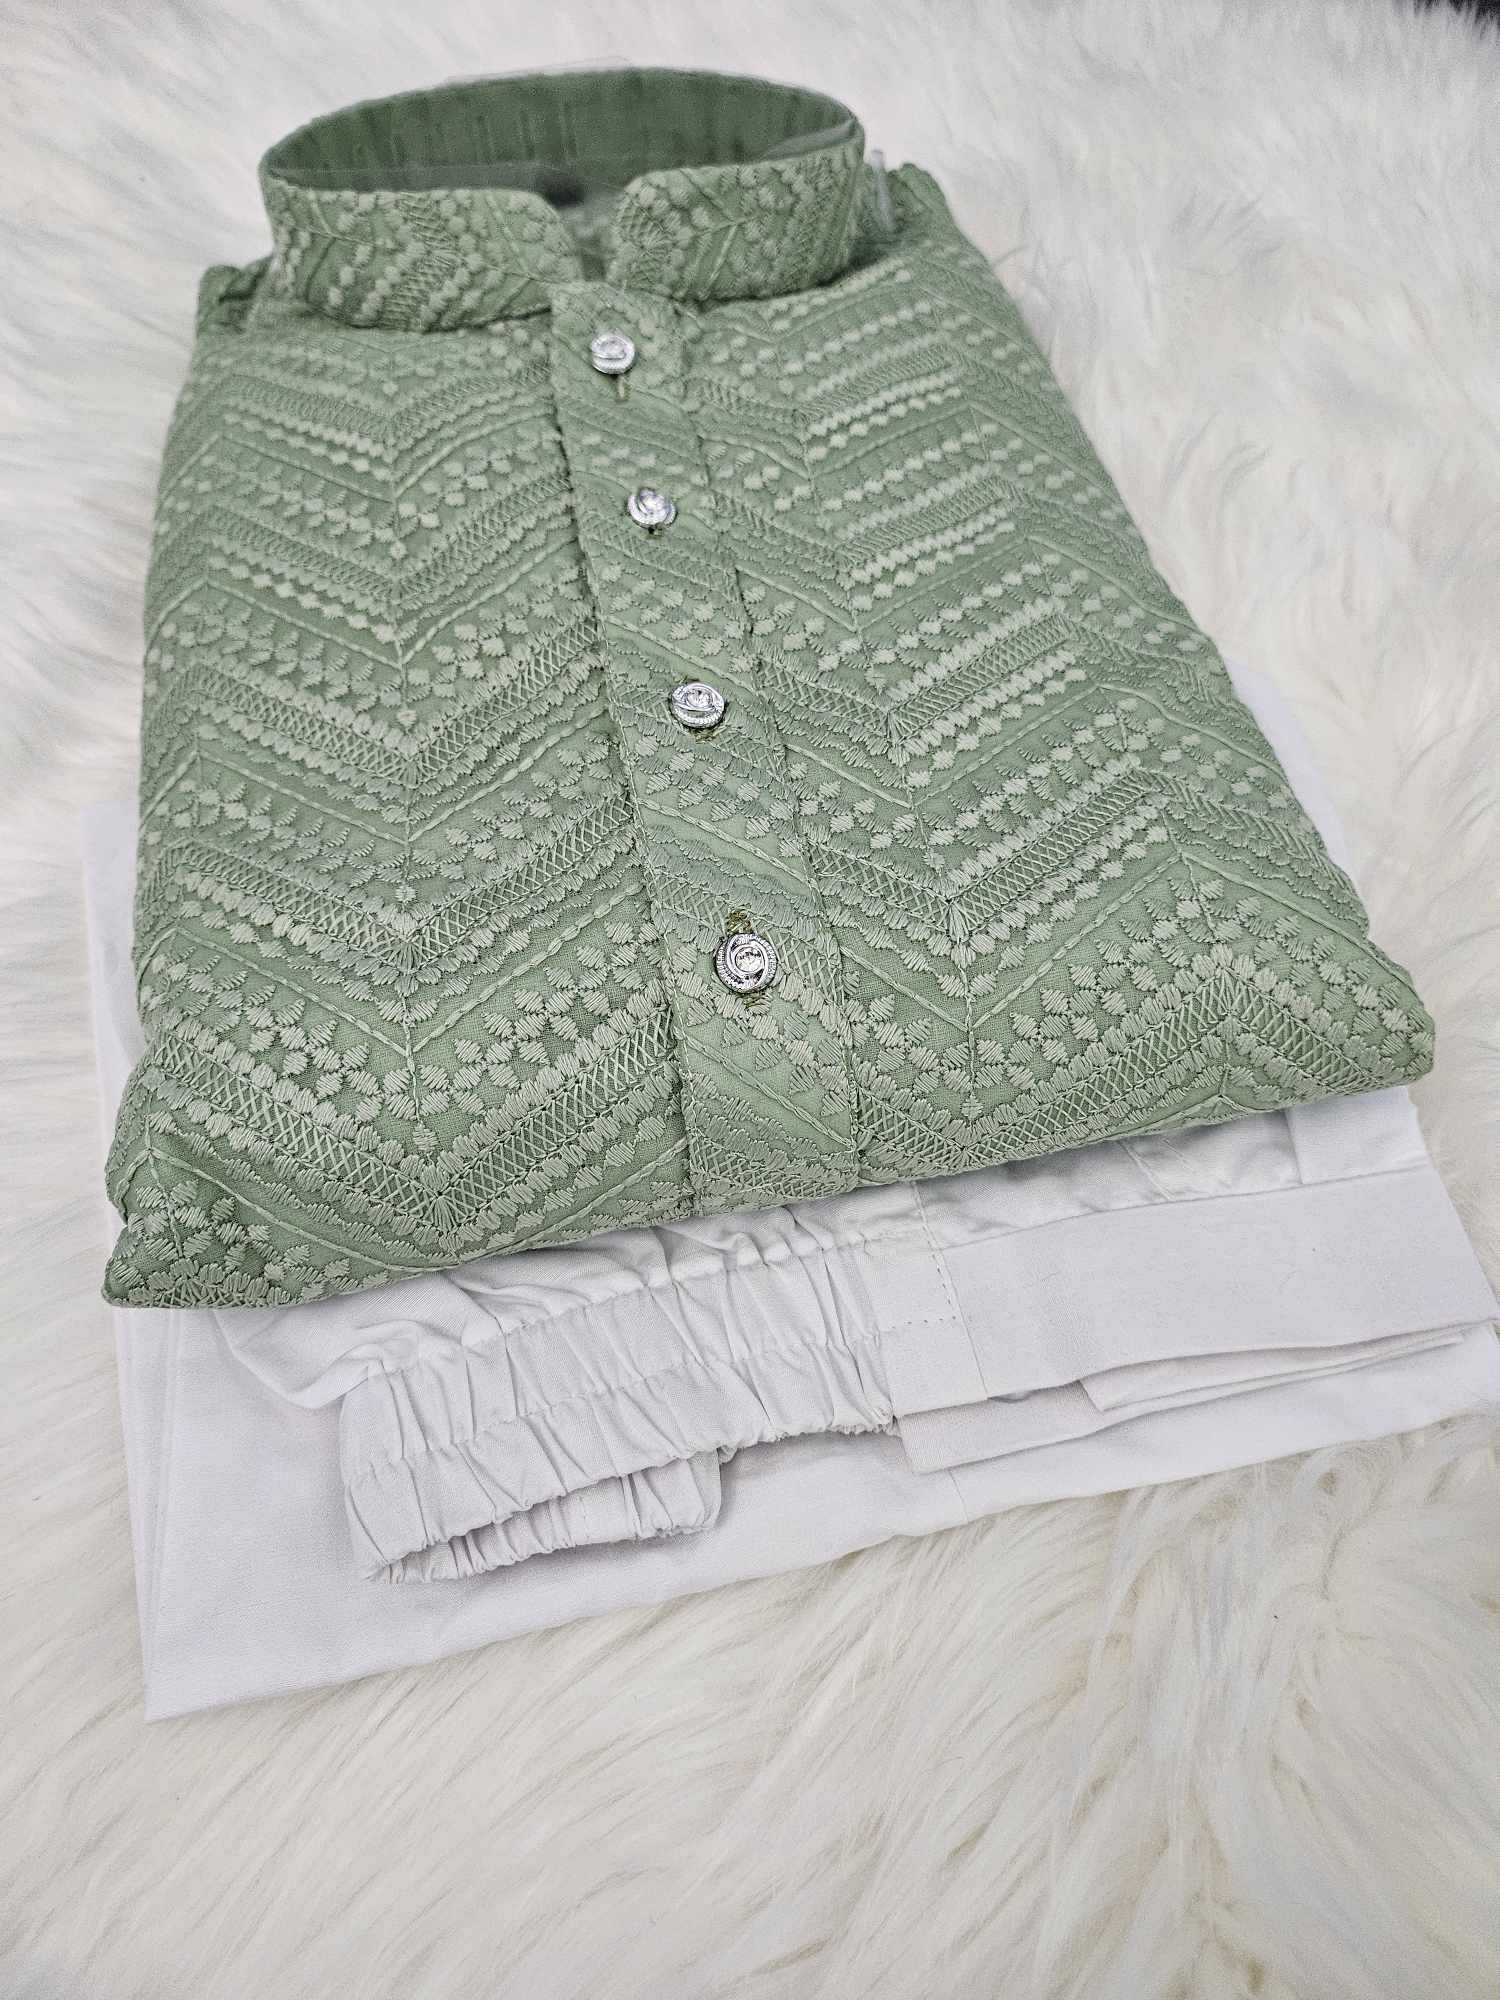 Pista Green Shade Kurta Pajama Set, Georgette with Intricate Chikankari Embroidery, KP - 1166